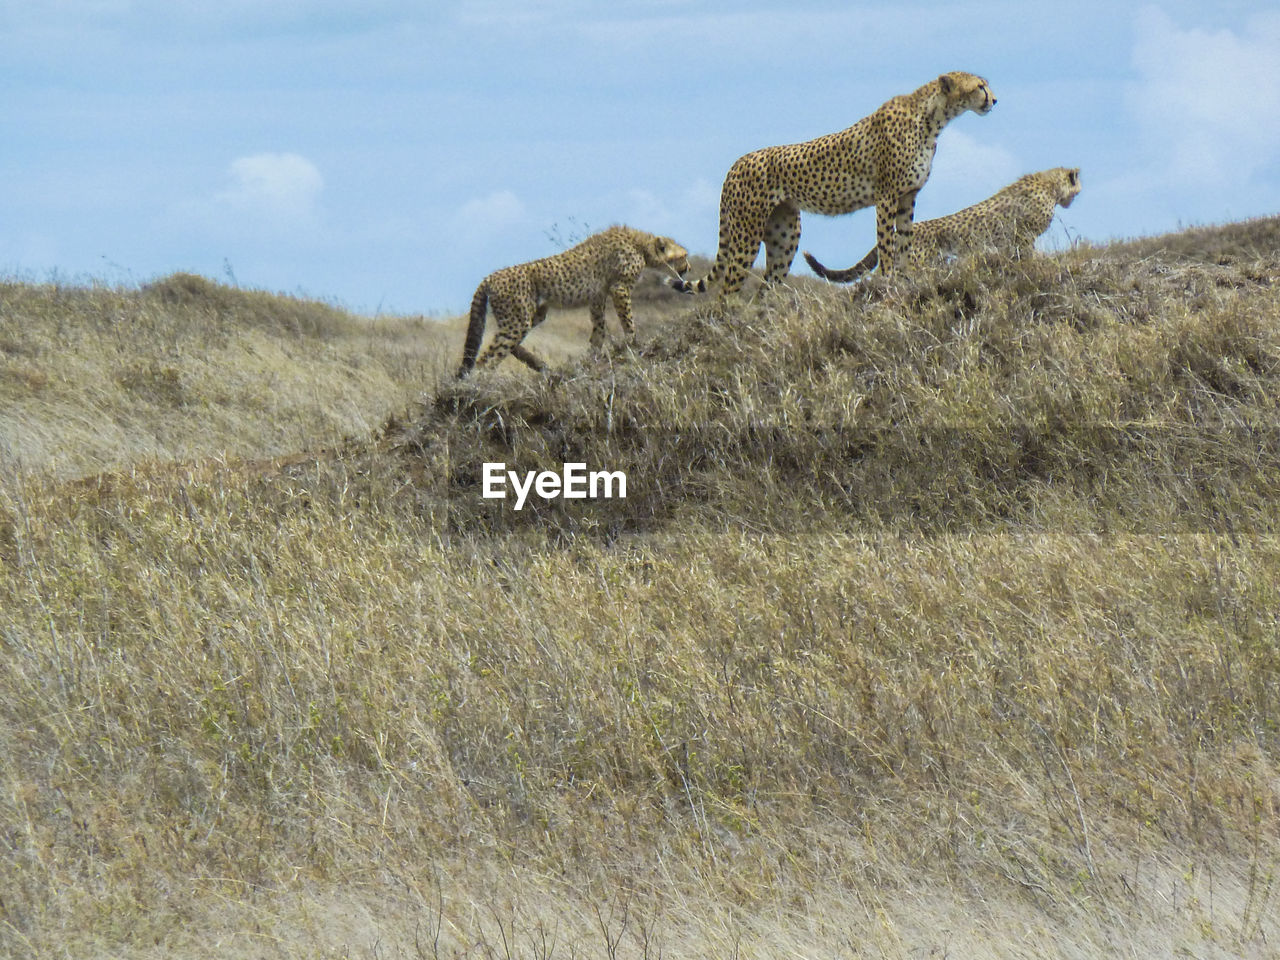 Cheetahs on grassy field against sky